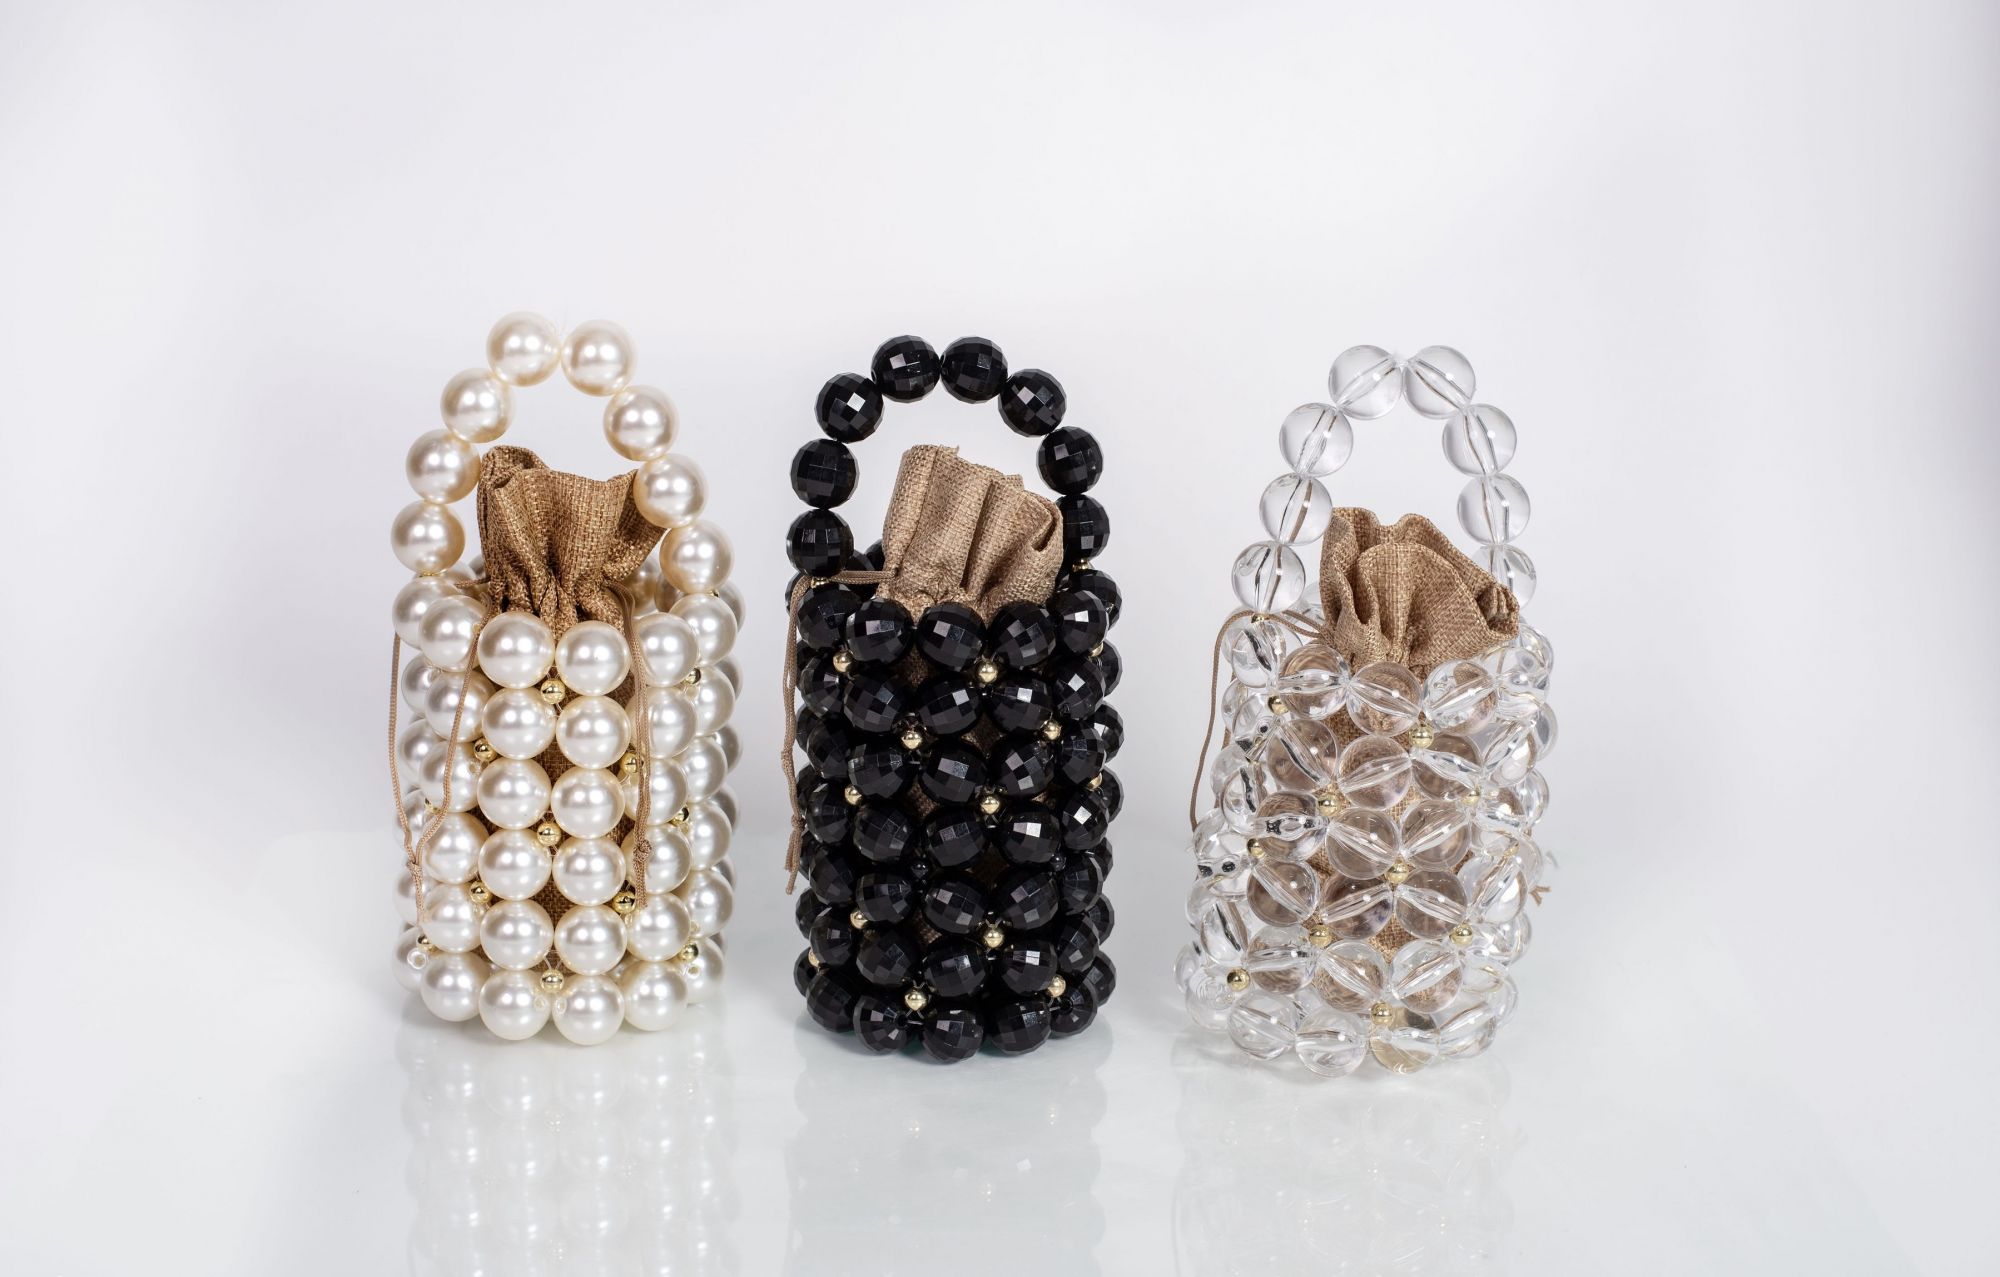 Three Abi bags: Pearl, Black and Clear.